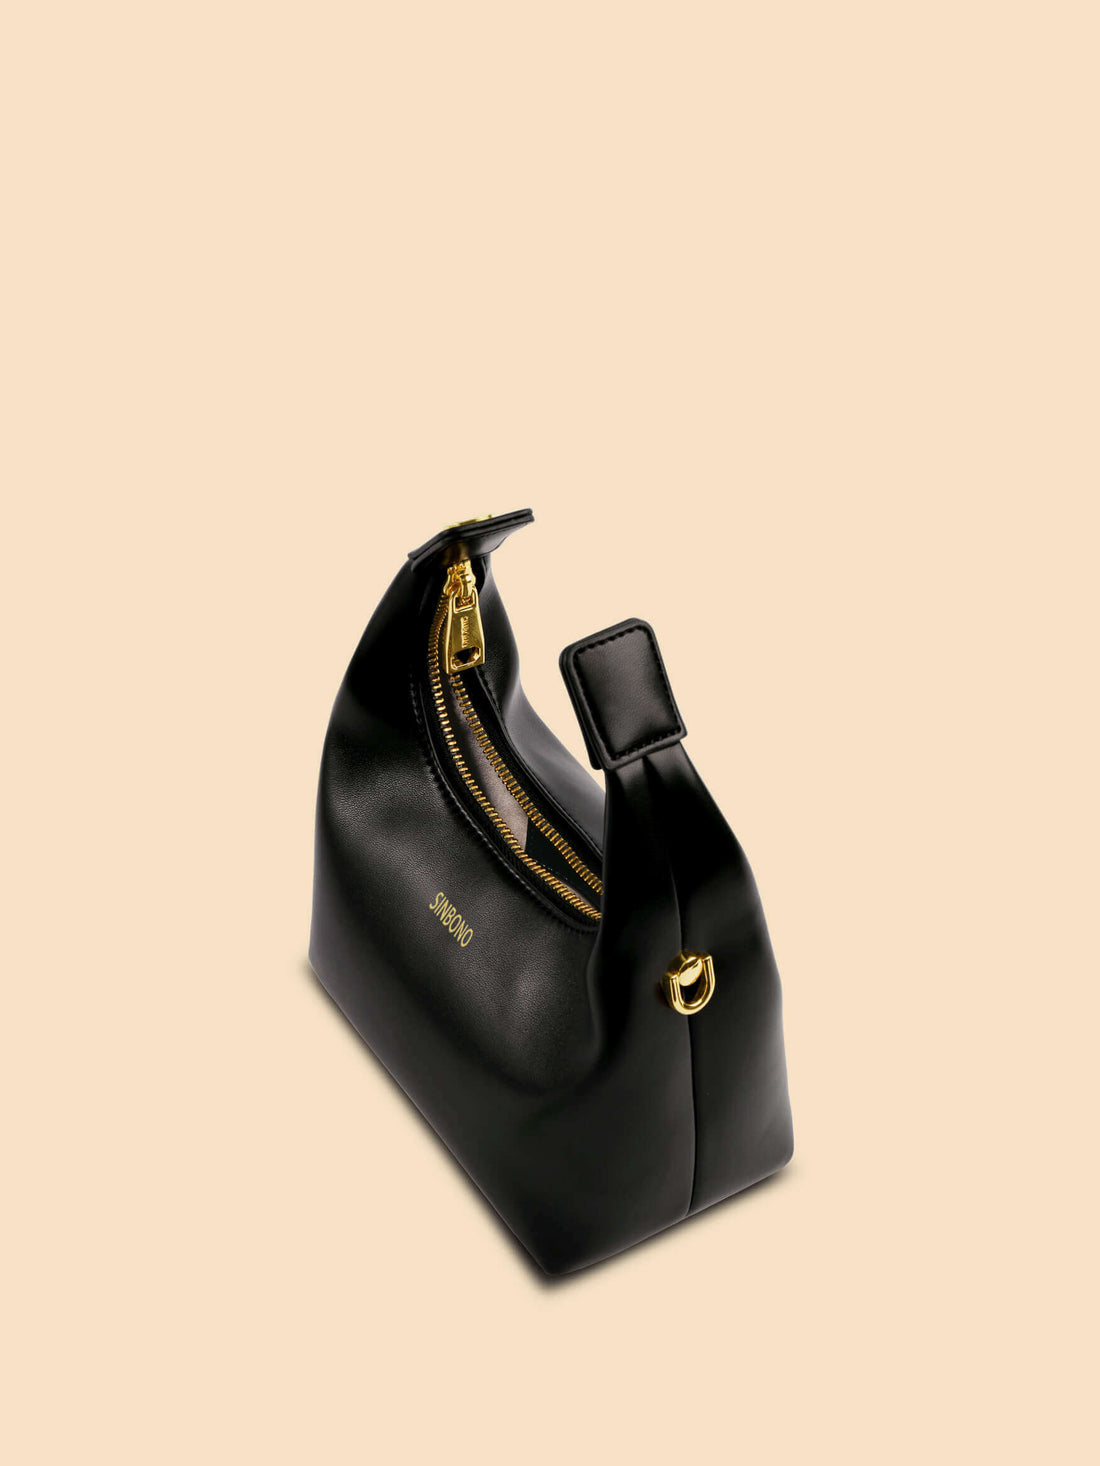 SINBONO Women's Fashion Vegan Leather Crossbody Bag